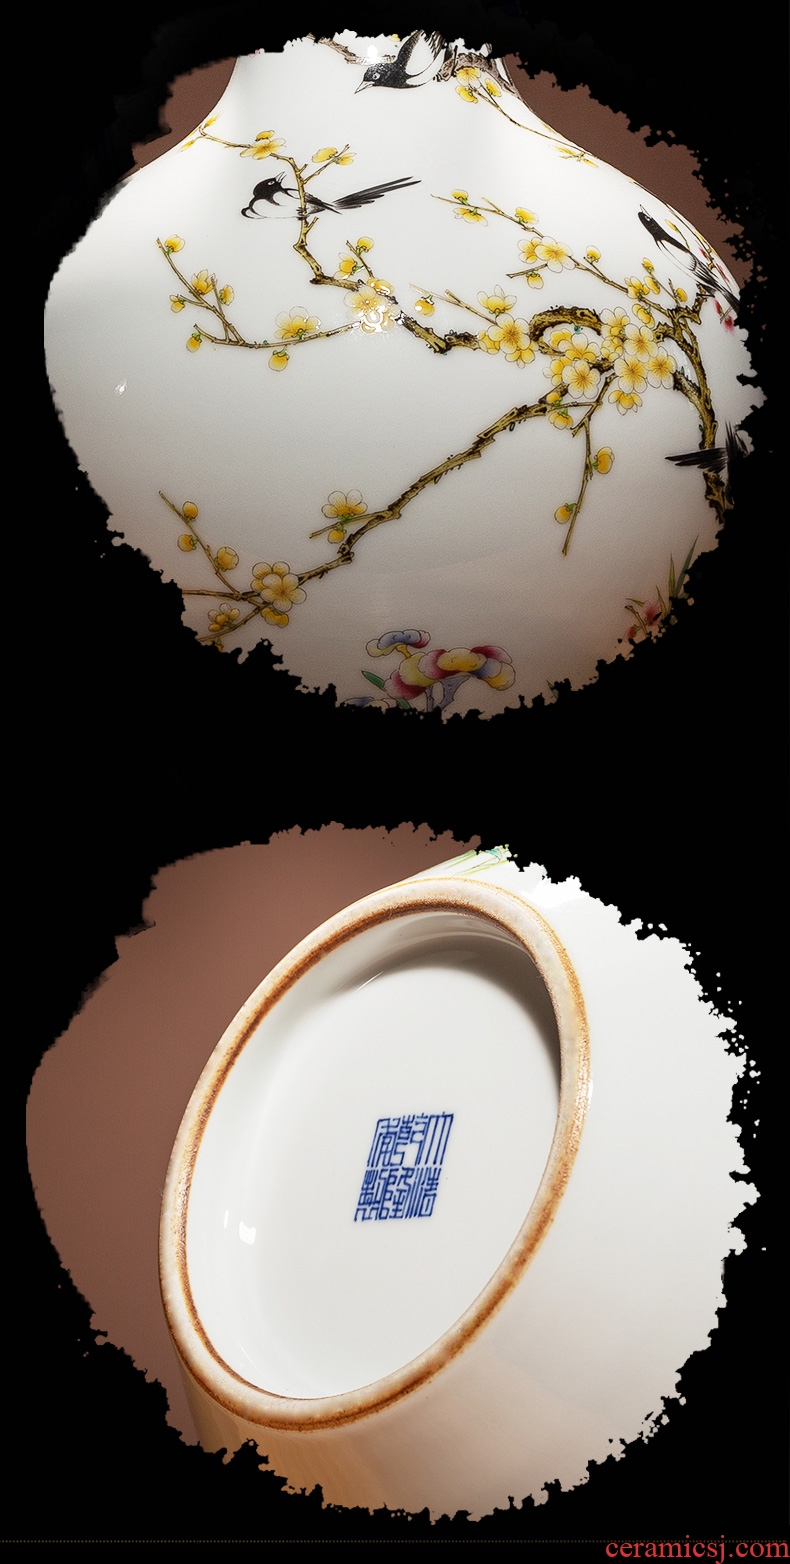 Better sealed kiln porcelain of jingdezhen ceramic antique hand-painted pastel home furnishing articles rich ancient frame big Chinese porcelain vase